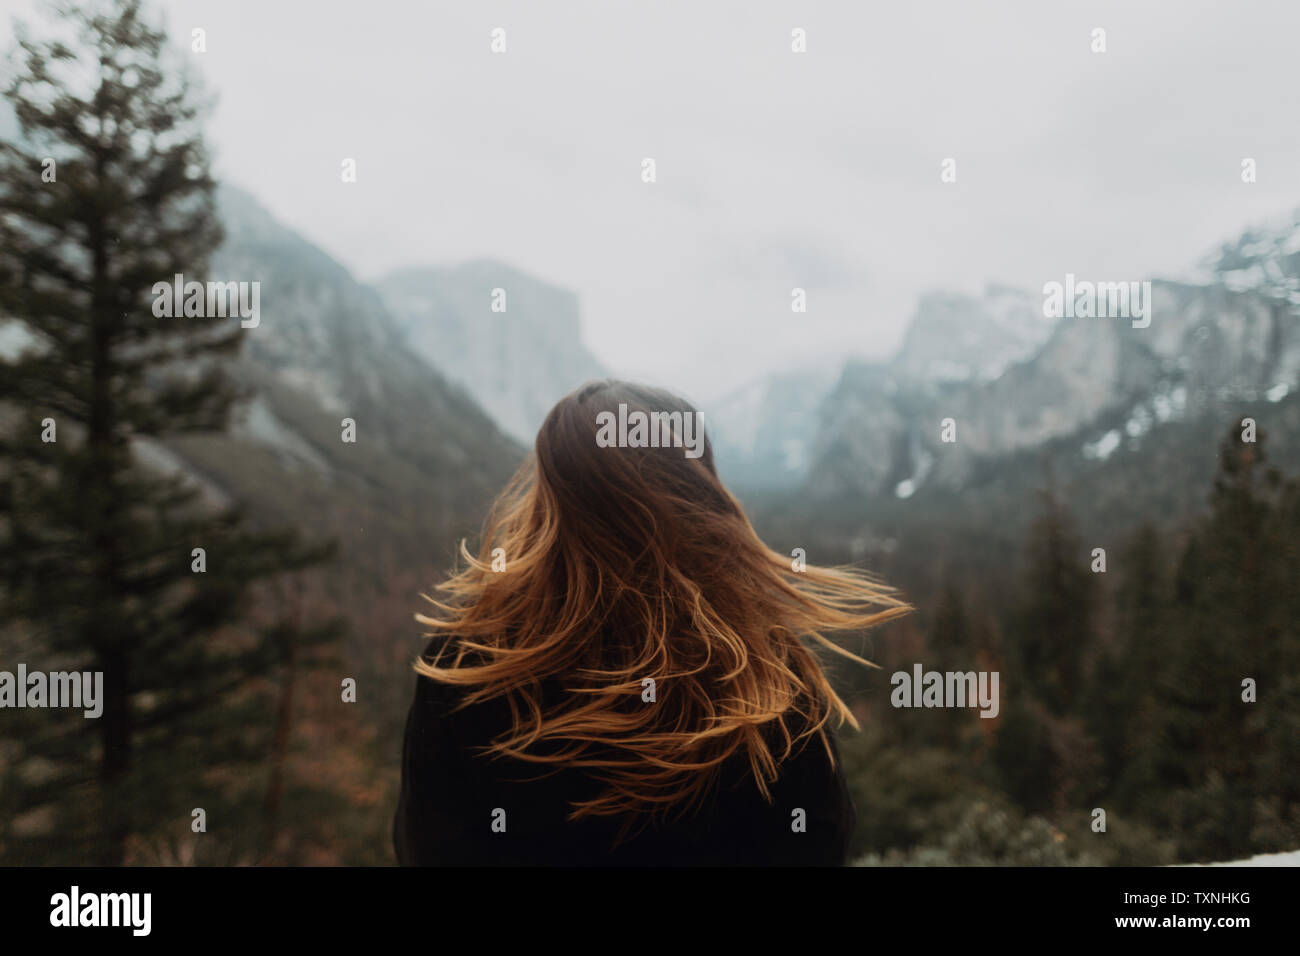 Young woman shaking long brown hair in mountain landscape, rear view, Yosemite Village, California, USA Stock Photo